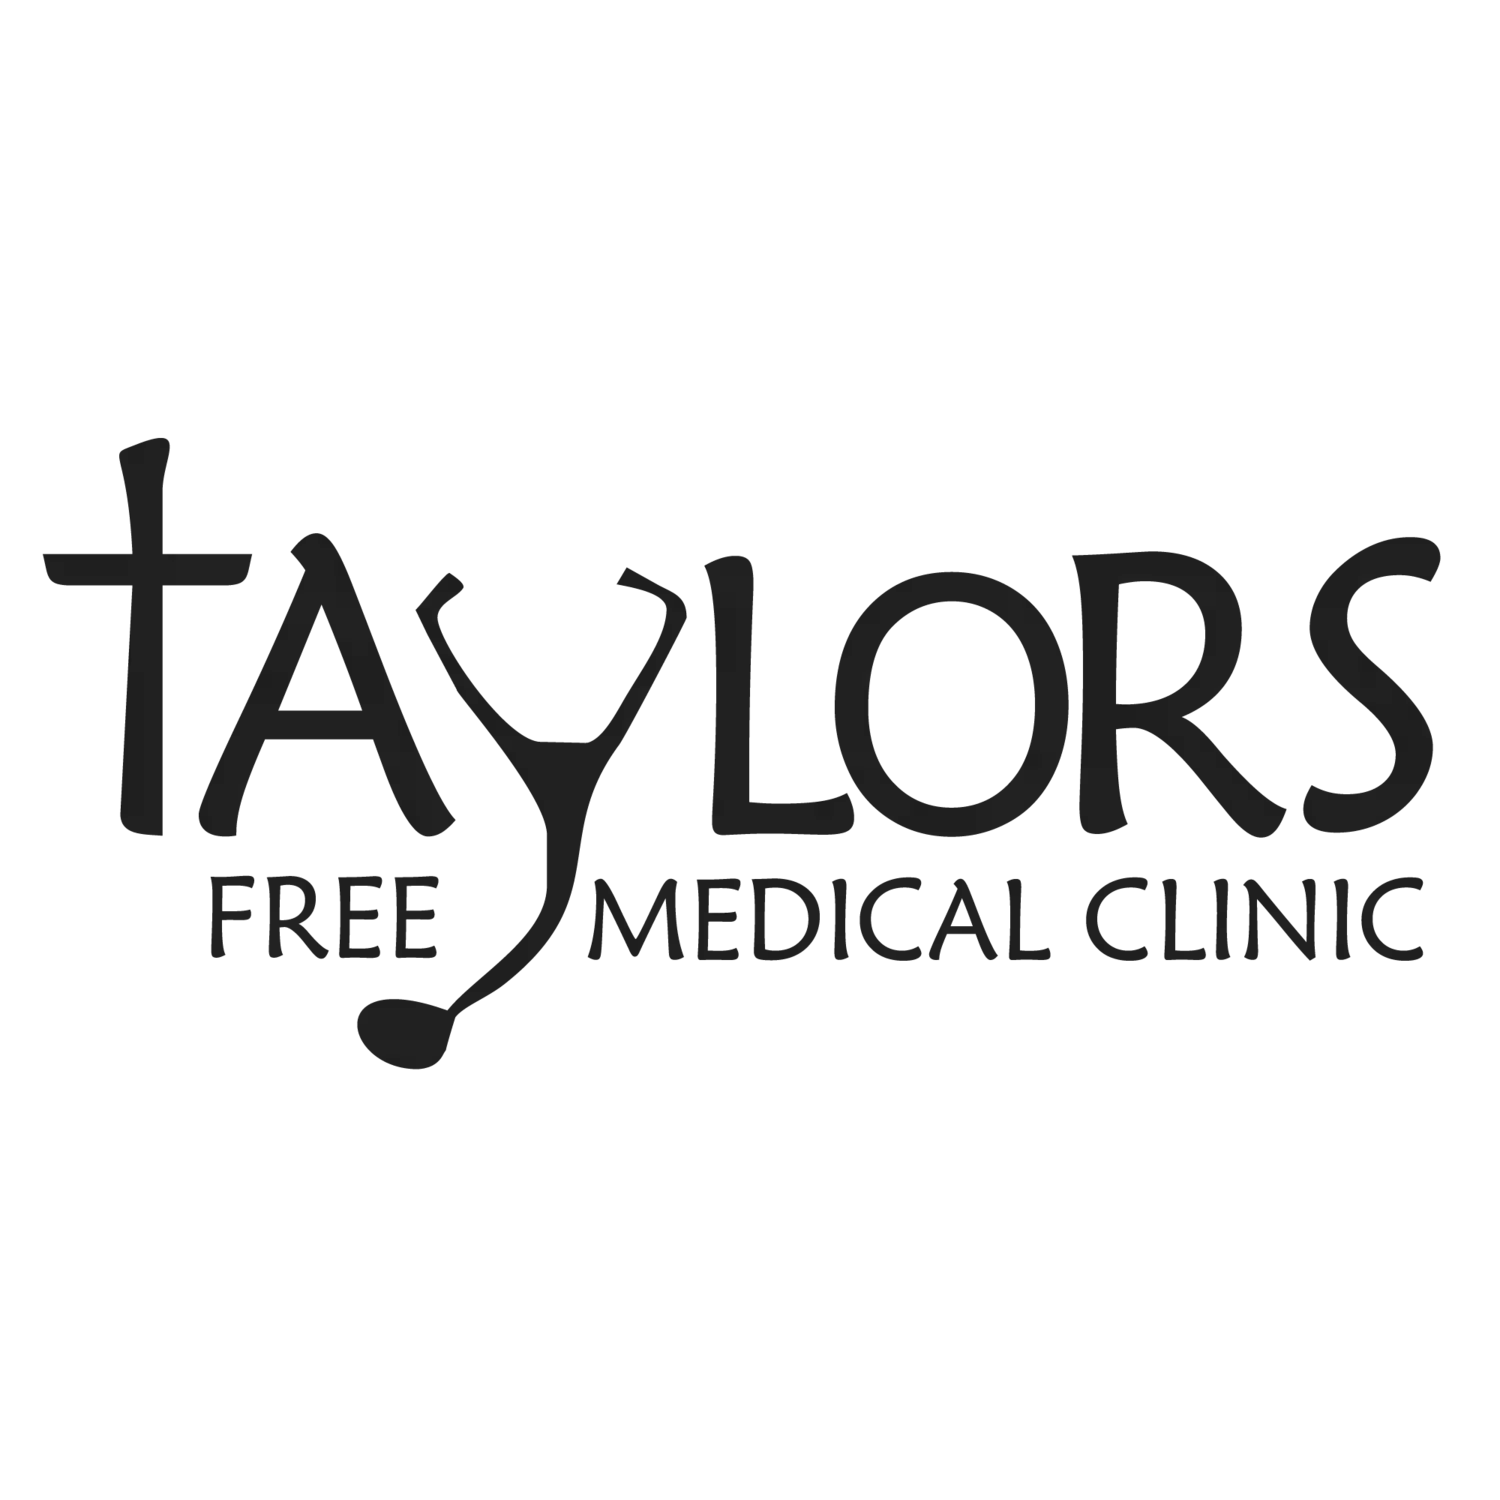 Taylors Free Medical Clinic